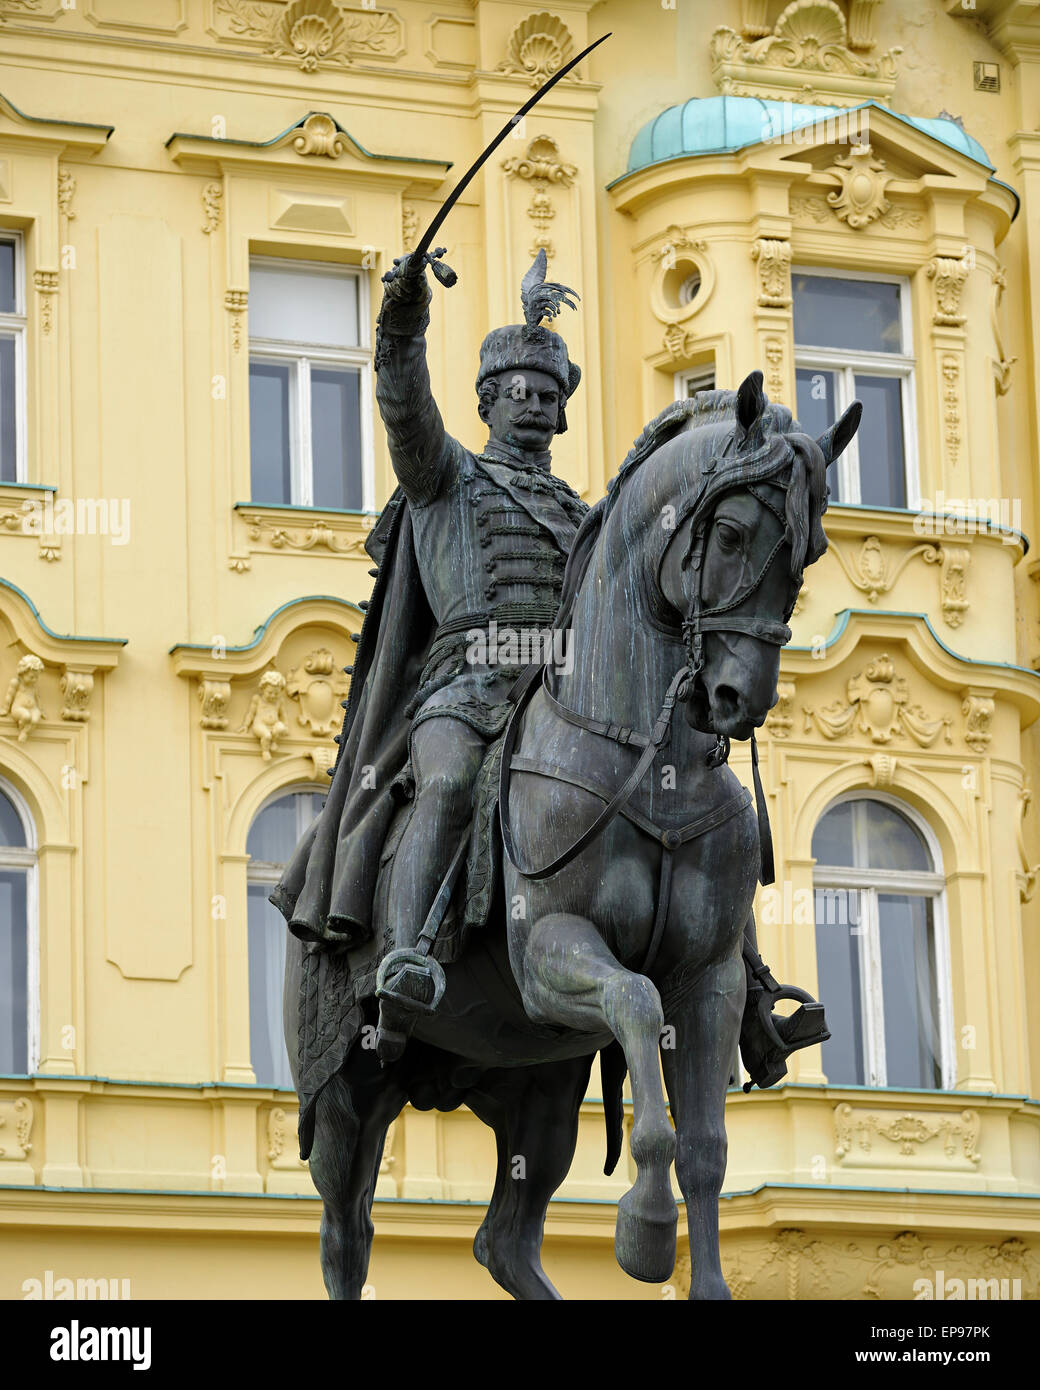 Statue of King Josip in the Main Square Ban Jelacic, Zagreb, Croatia. Stock Photo